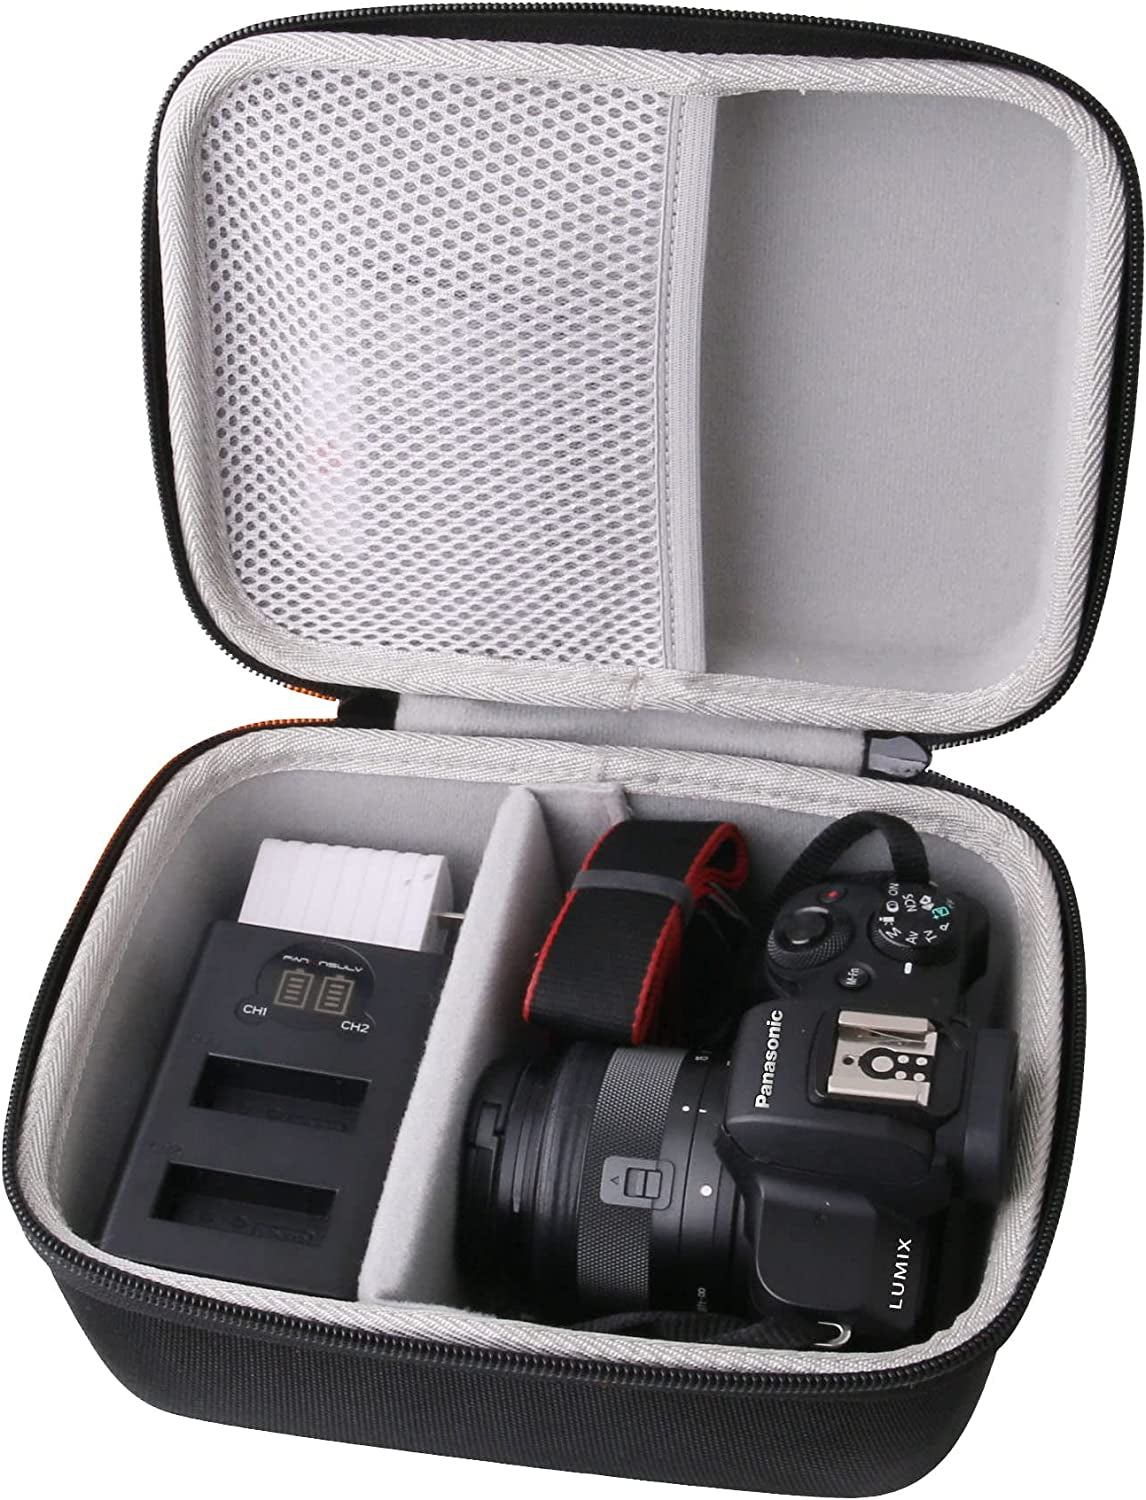 Hard Carrying Case Compatible with Nikon COOLPIX B500/B600/B700 Digital Camera